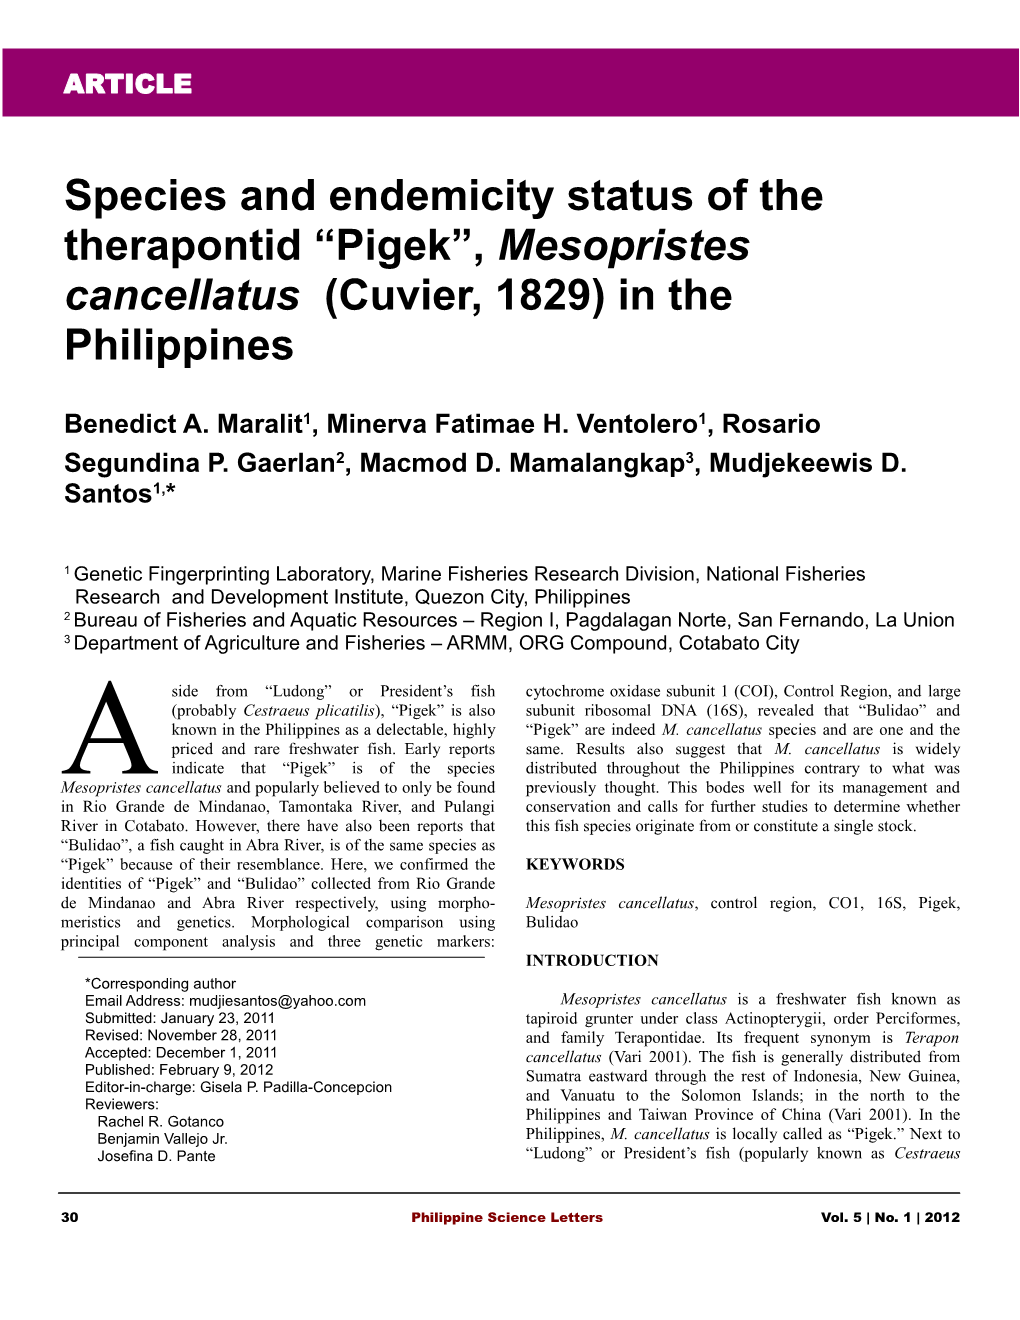 Mesopristes Cancellatus (Cuvier, 1829) in the Philippines